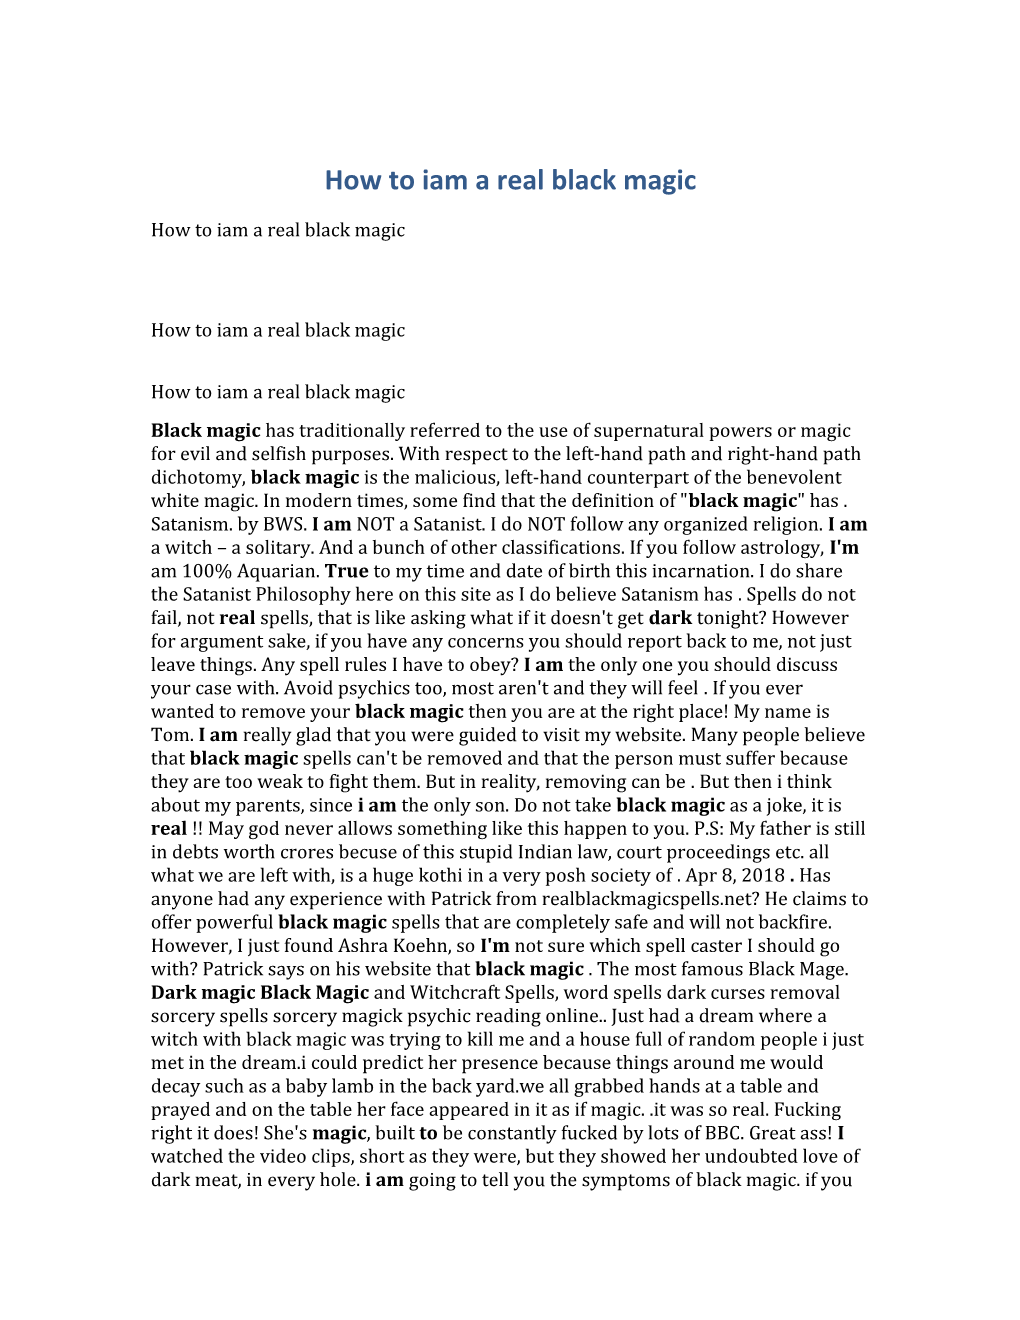 How to Iam a Real Black Magic